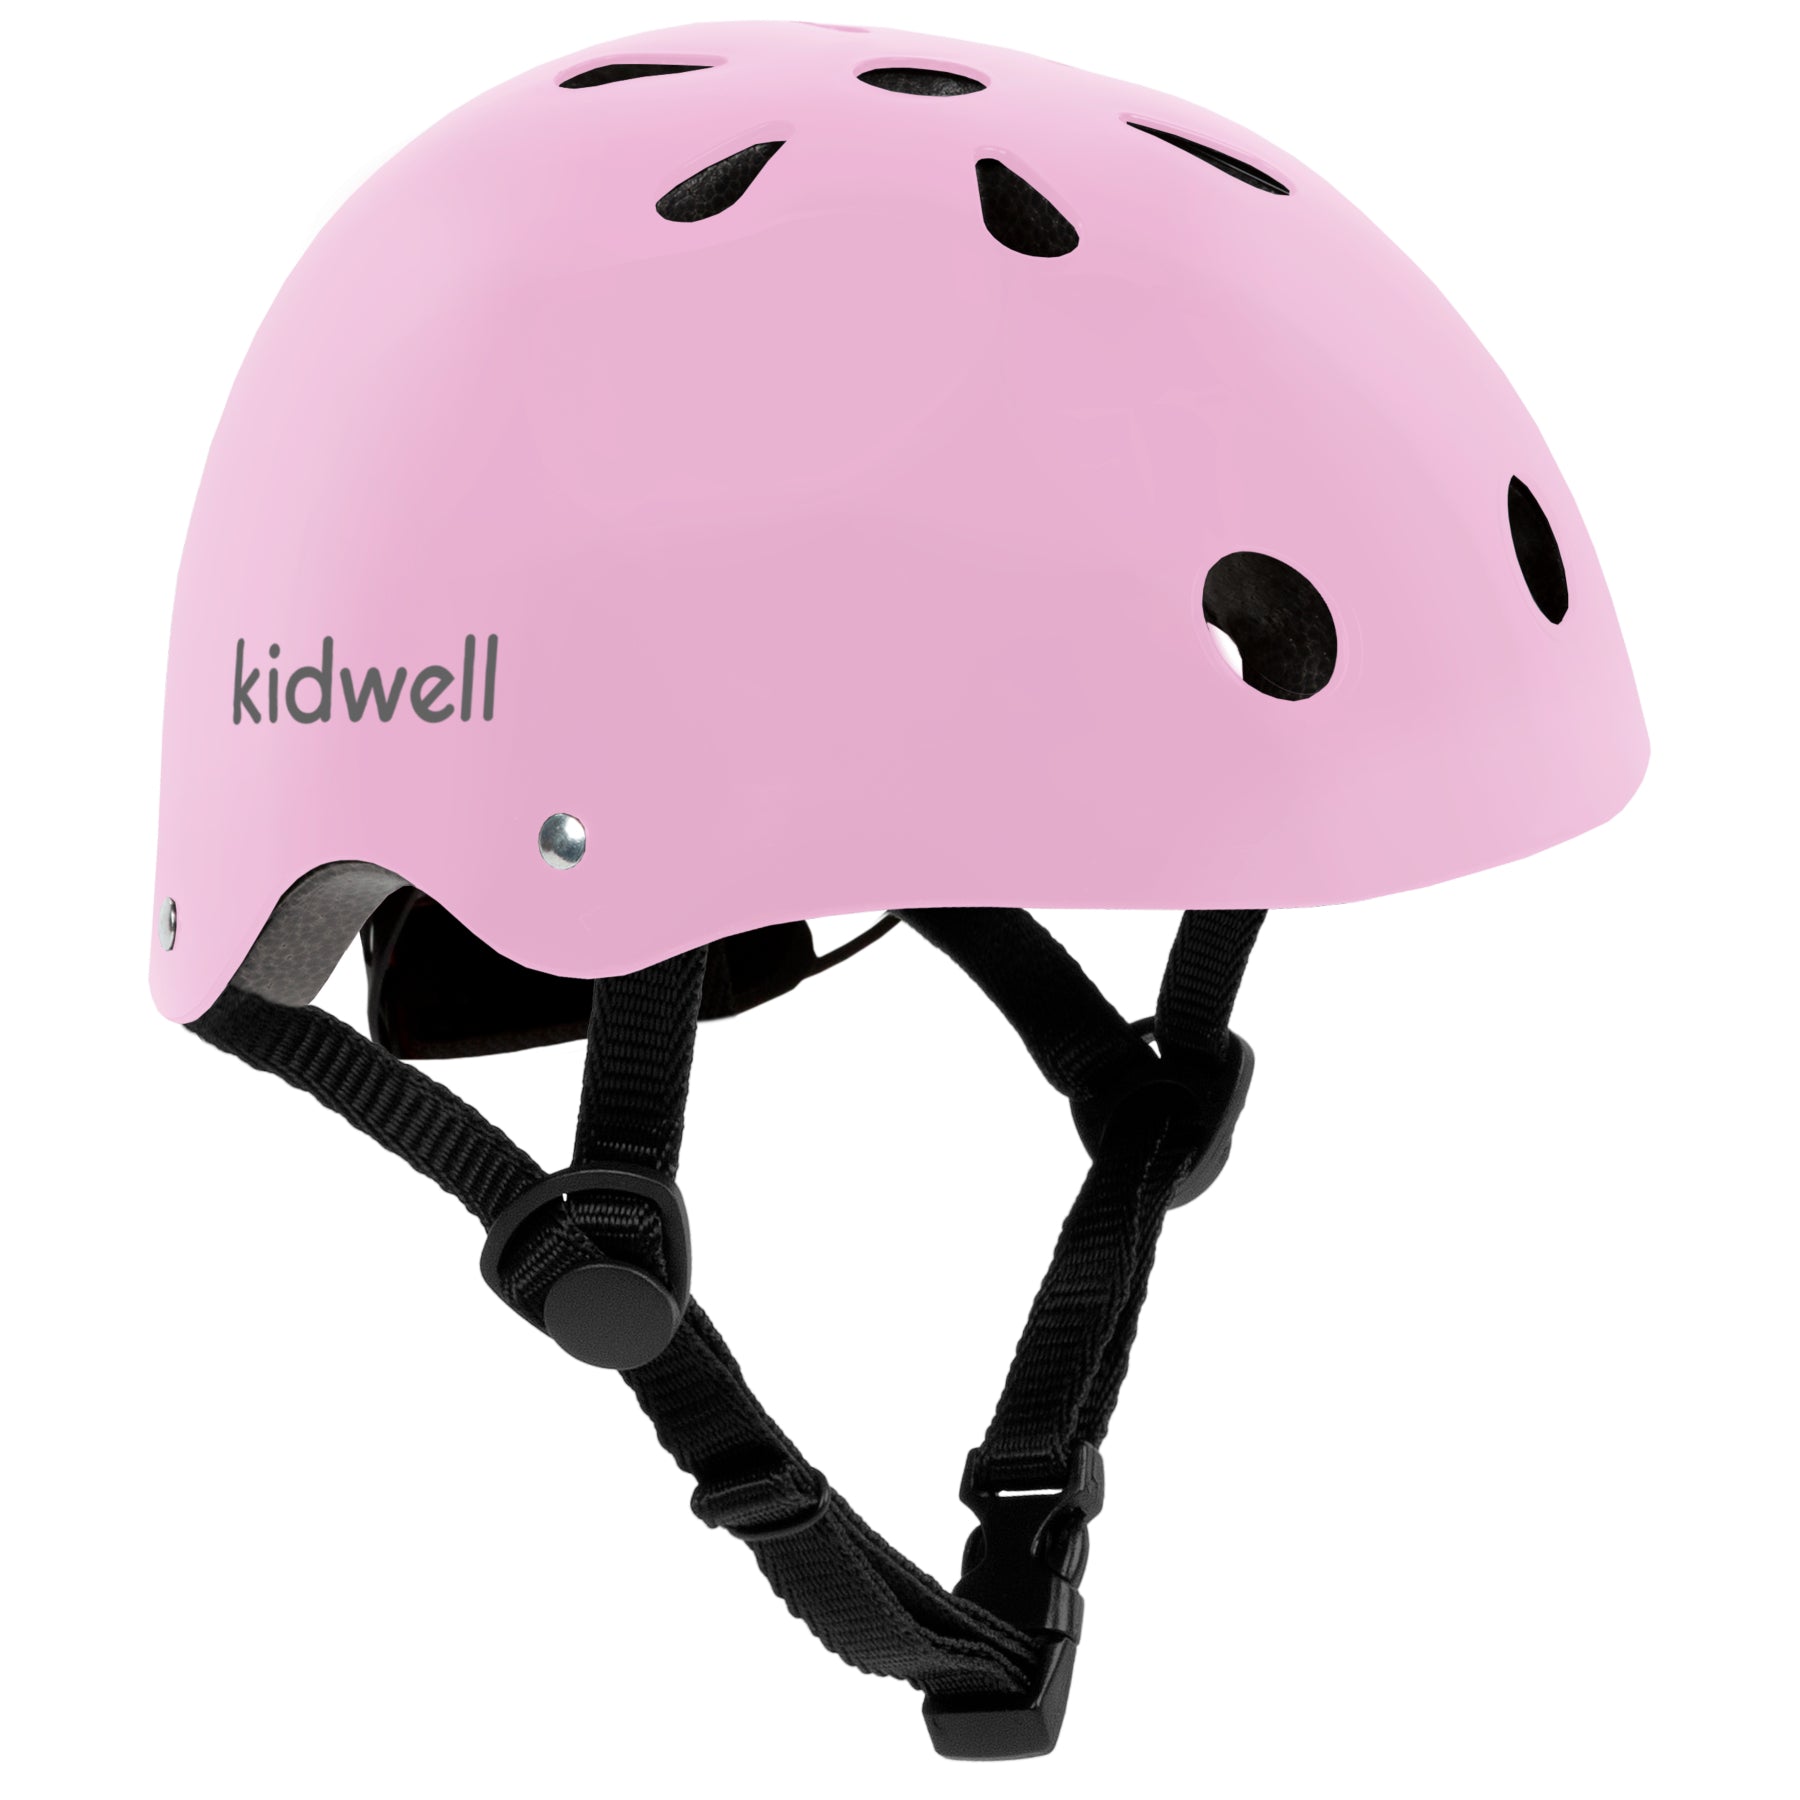 Kidwell ORIX II S - Pink